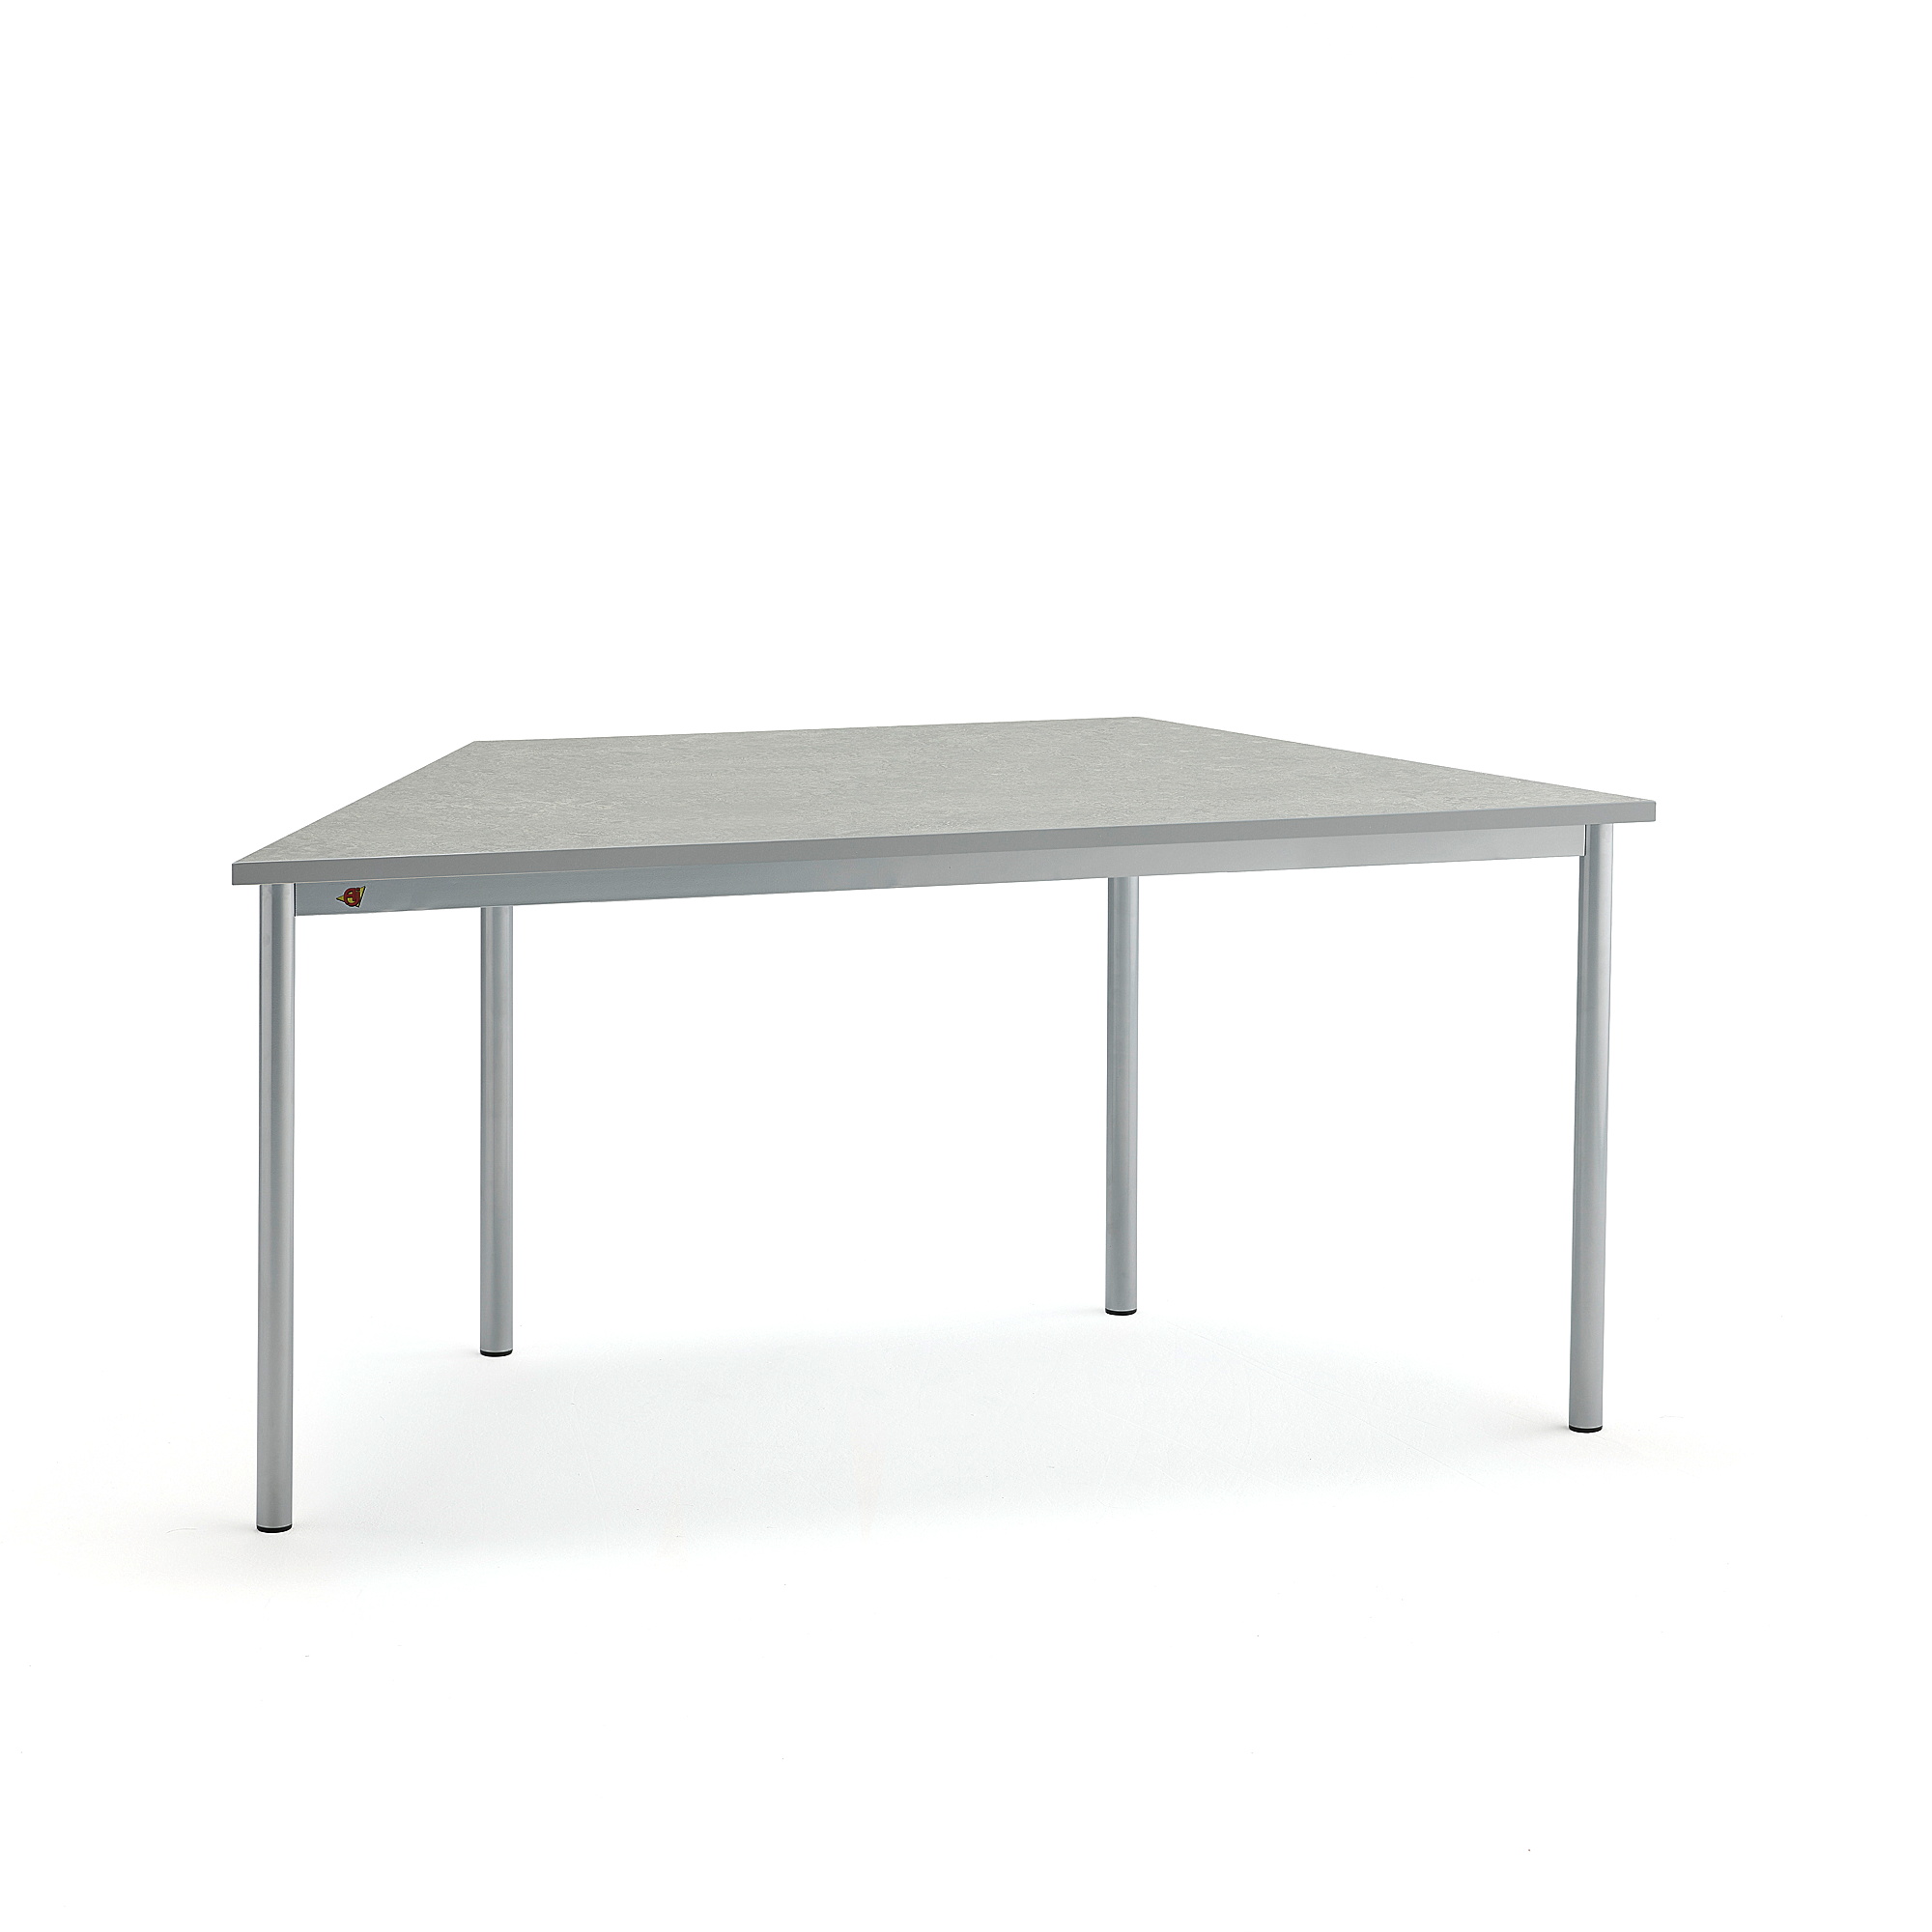 Stůl SONITUS TRAPETS, 1600x800x720 mm, stříbrné nohy, deska s linoleem, šedá